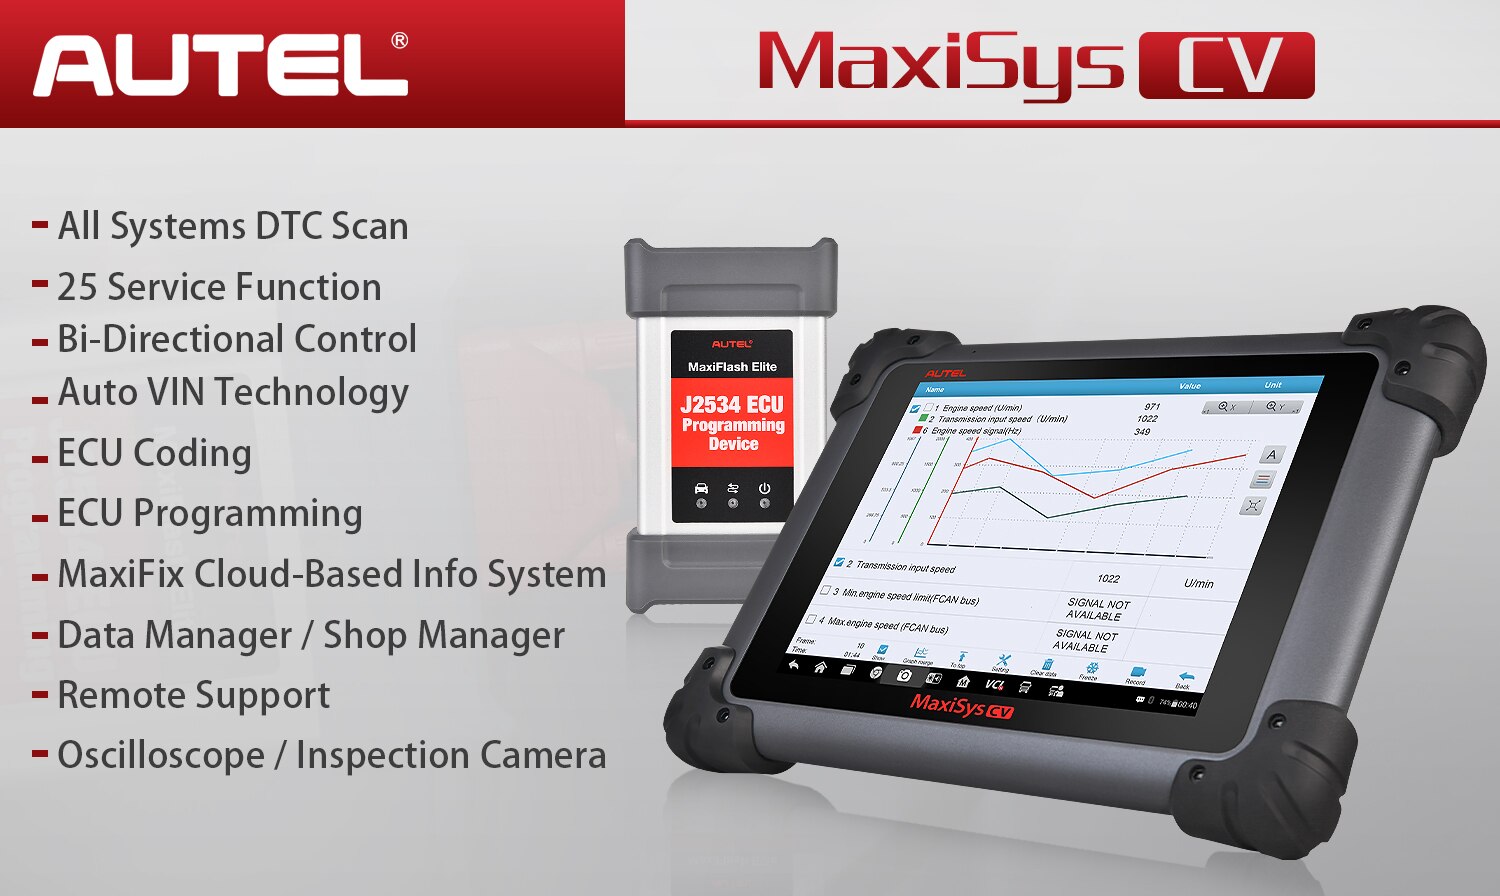 Autel-Maxisys-CV-Scanner-MS908CV-Heavy-Duty-Truck-Diagnostic-Tool-With-J2534-ECU-Programming-Tool-Commercial-Vehicle-Diagnostics-1005001411843018